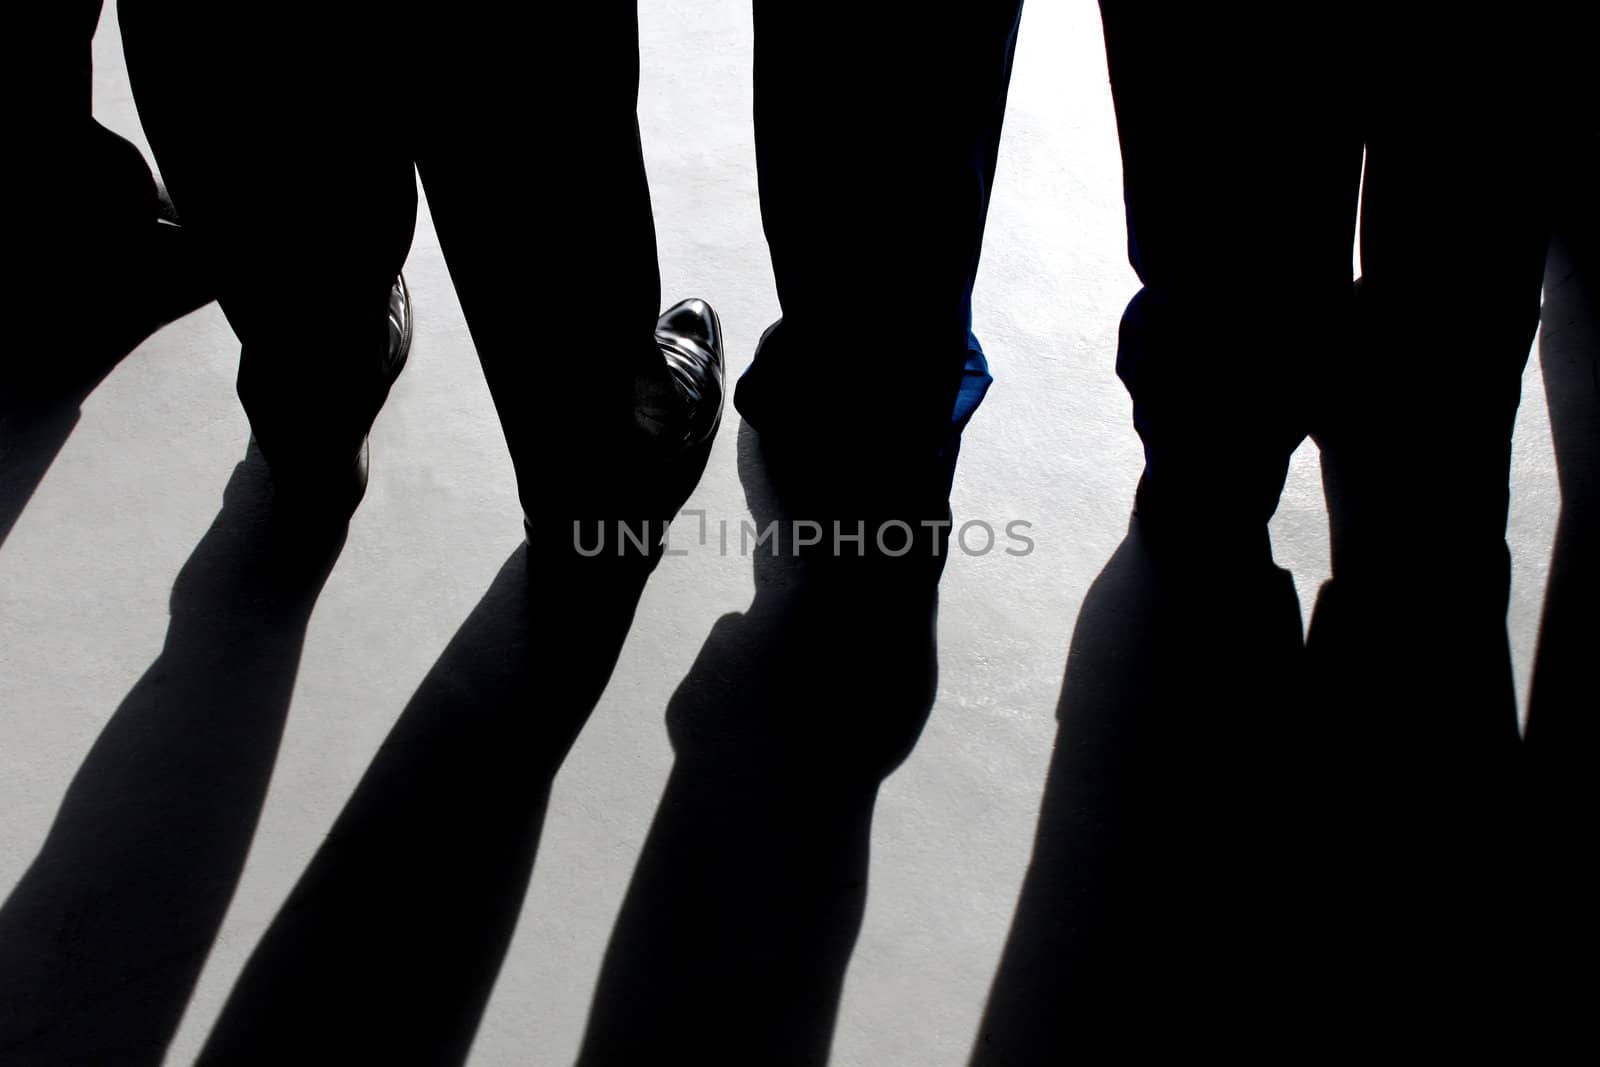 Shadows of  young boys on their graduation black pants